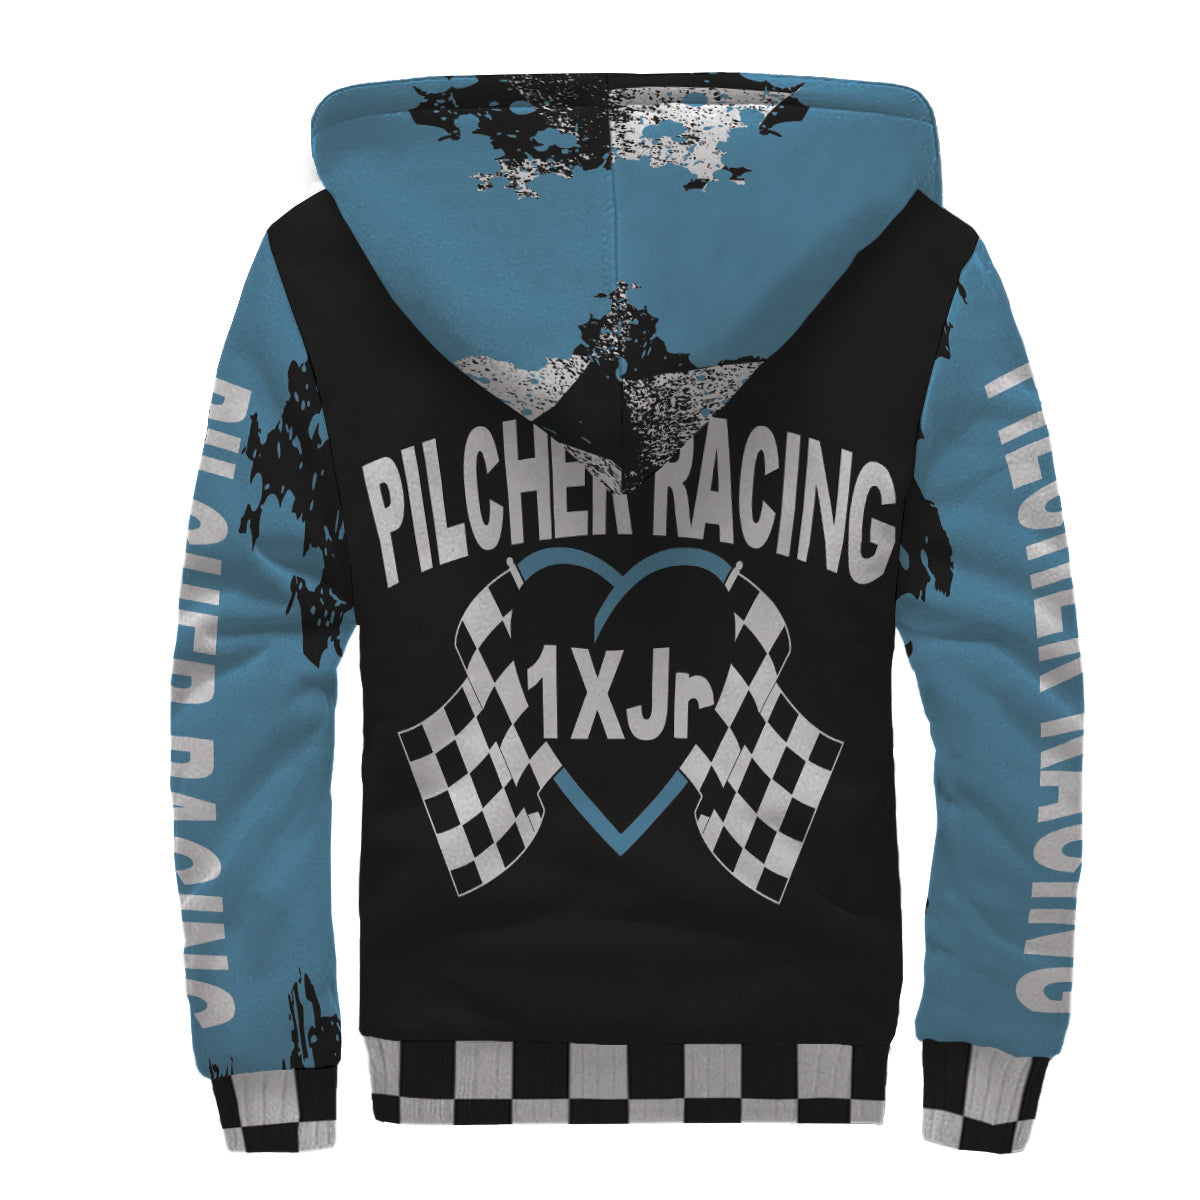 Pilcher Racing Sherpa Jacket 